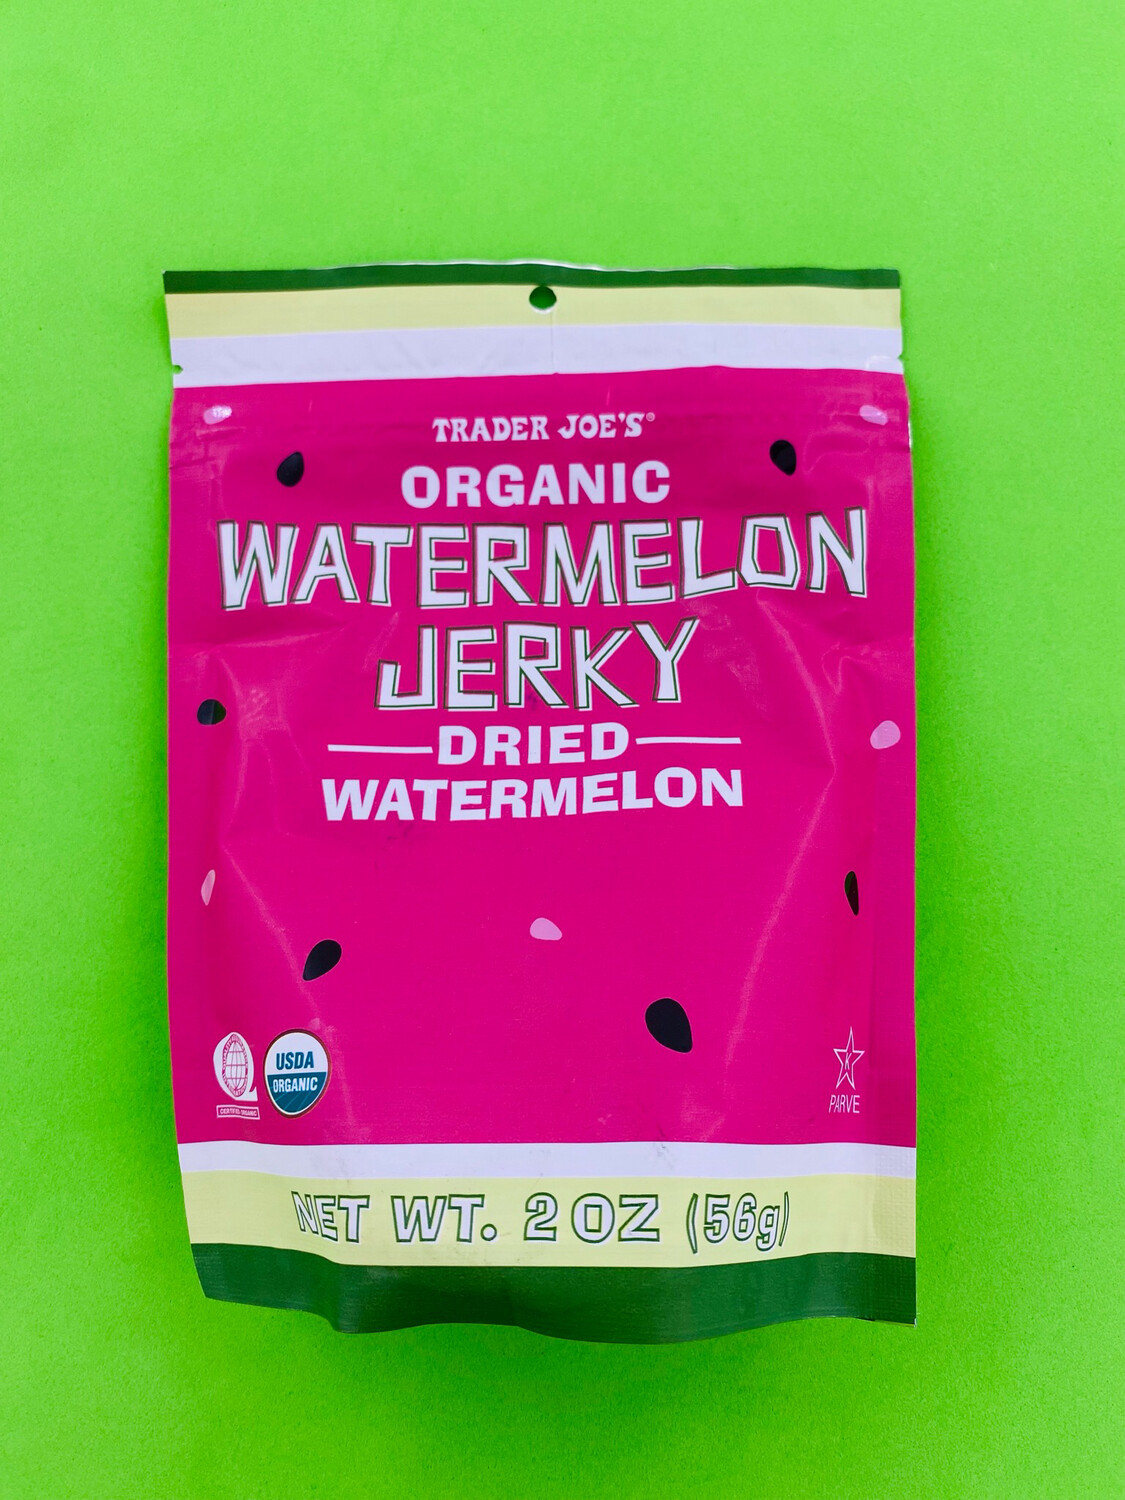 Trader Joe’s Organic Watermelon Jerky Dried Watermelon